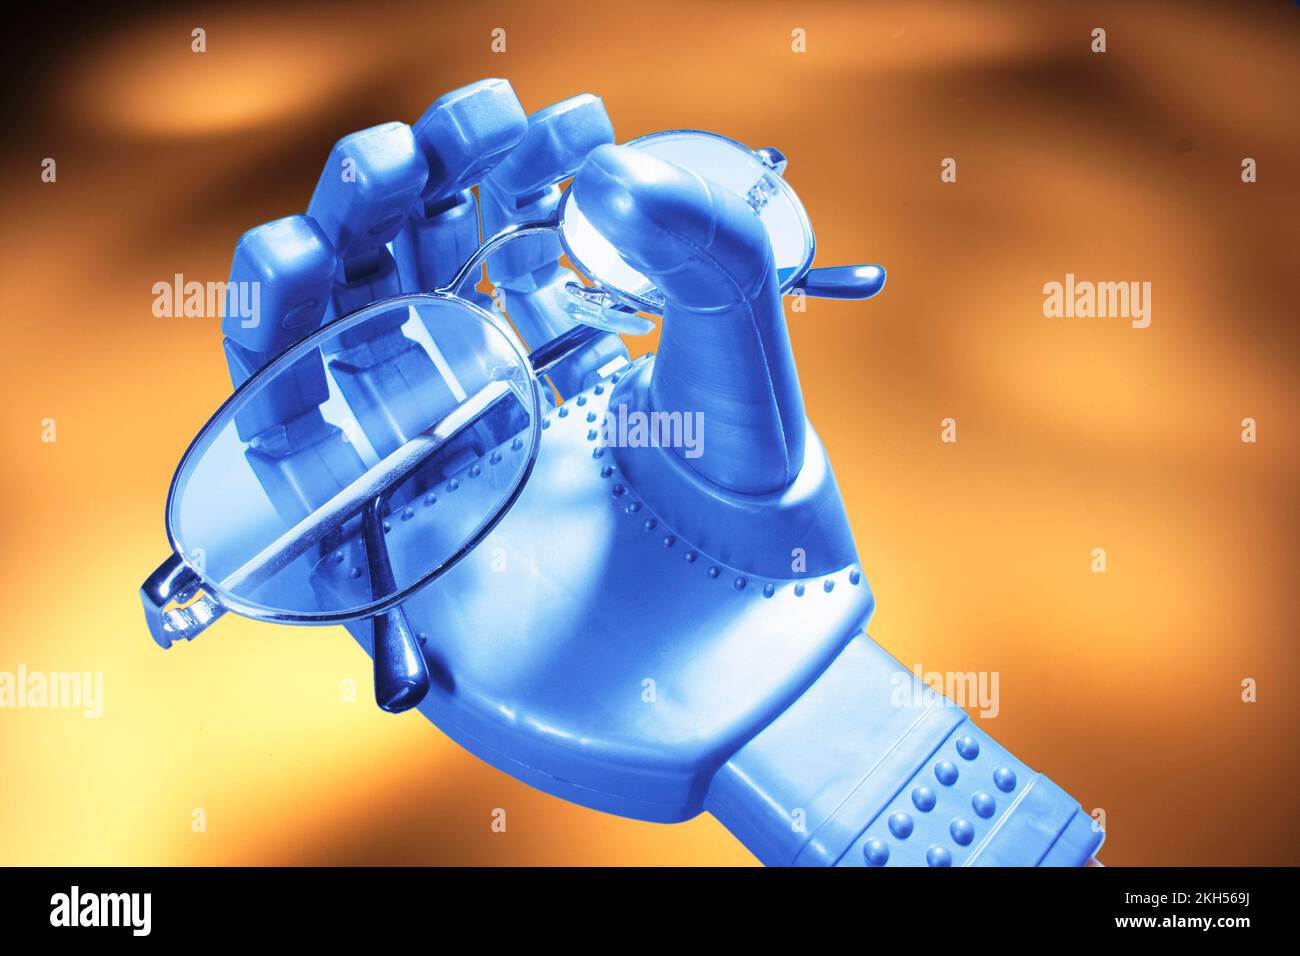 Robotic Hand with Eyeglasses on Warm Background Stock Photo